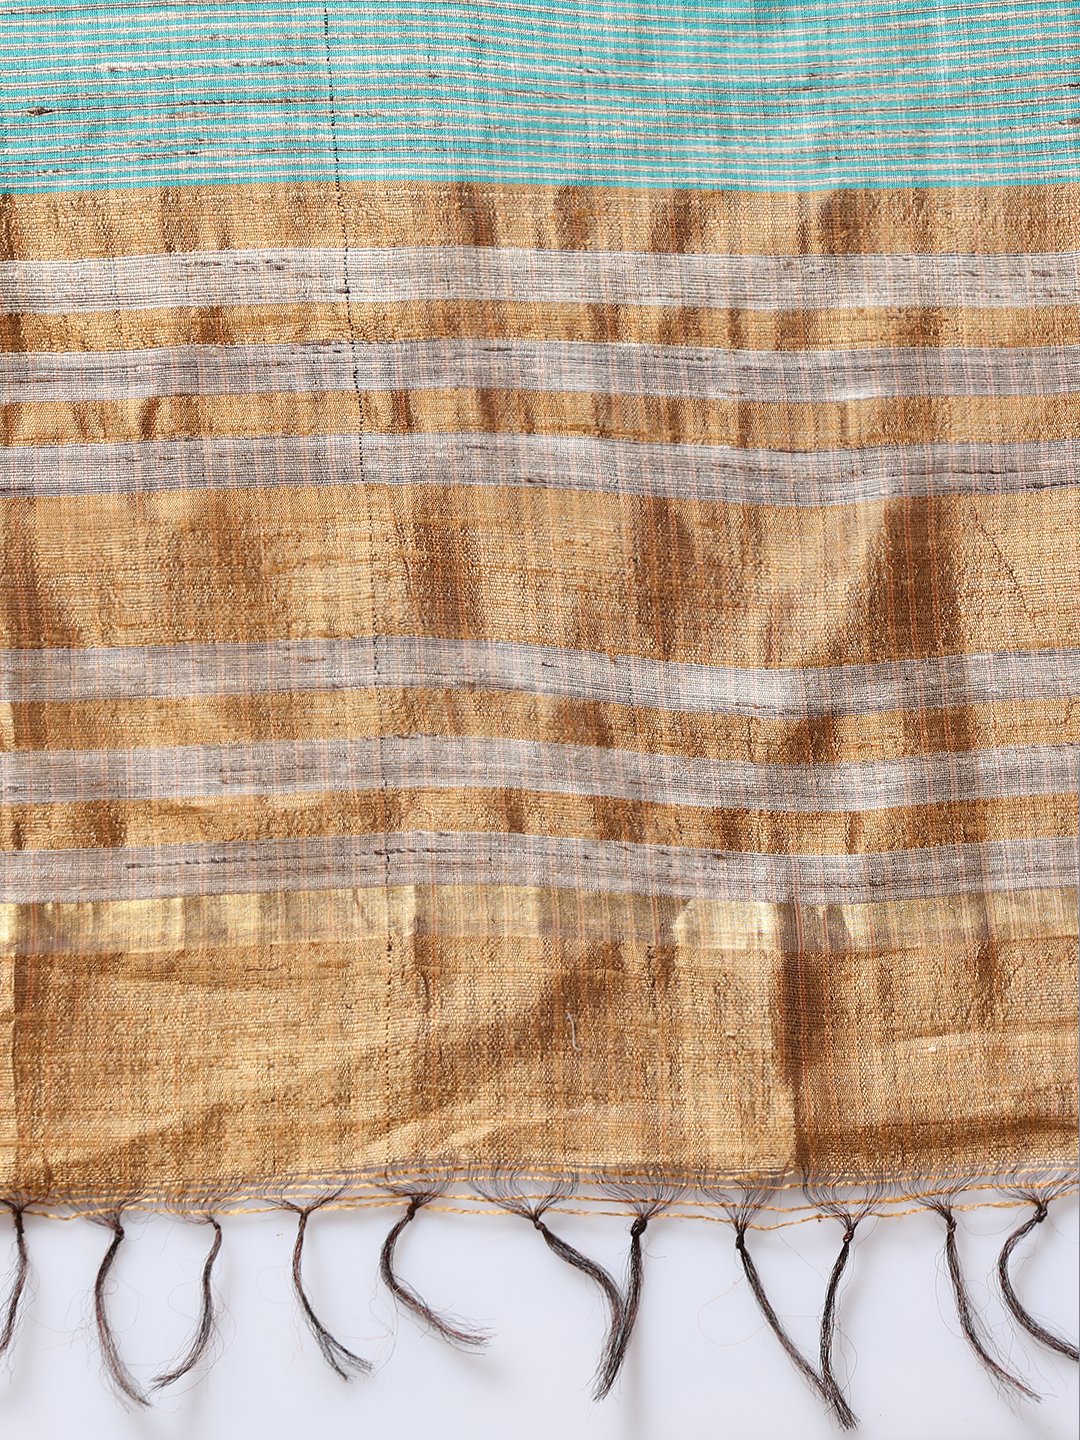 Golden brown handloom tussar silk saree